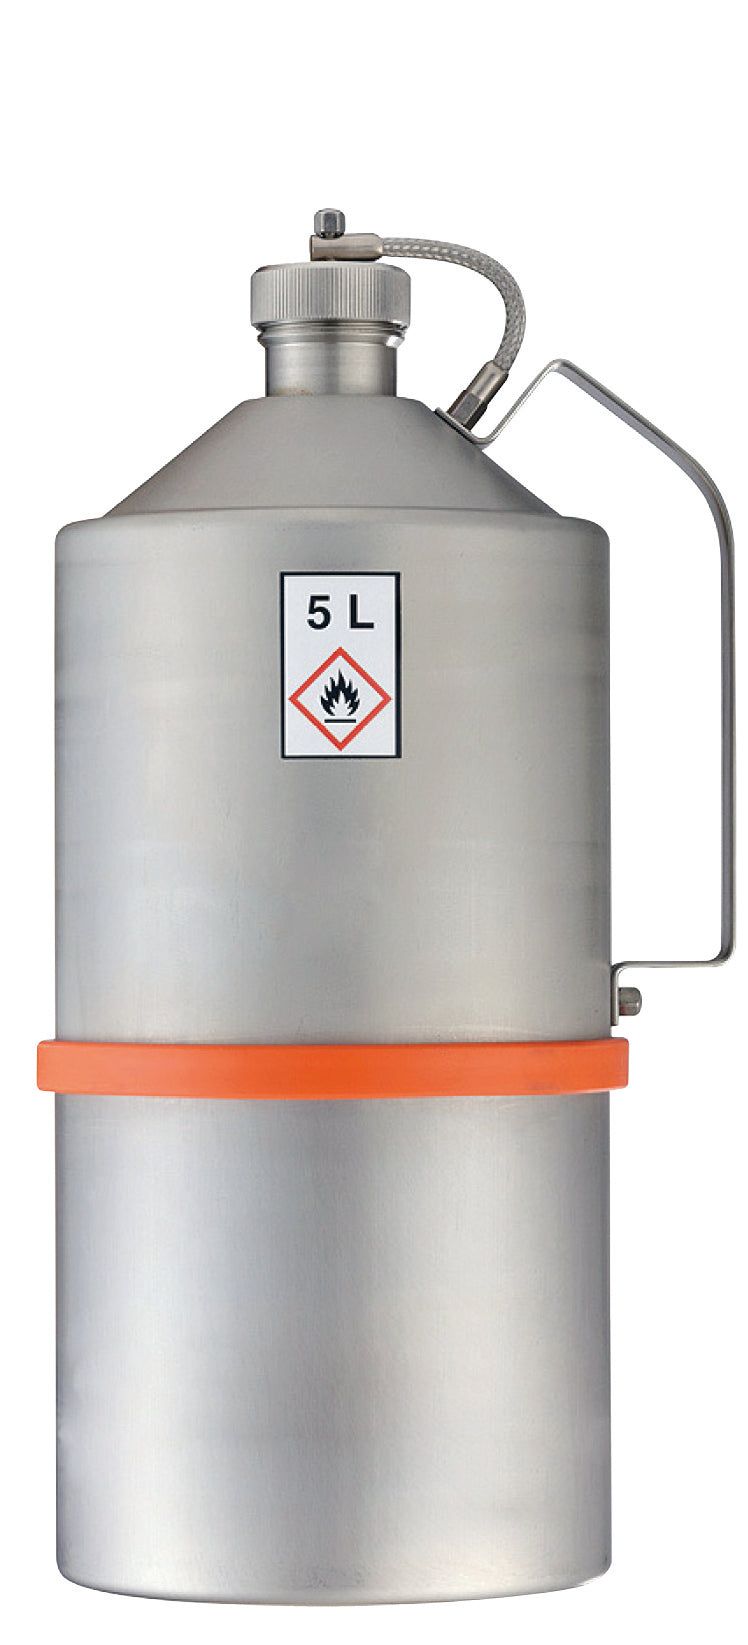 Bidon de transport acier inoxydable (1.4571), contenu: 5 litres, acier inoxydable 1.4301 poli